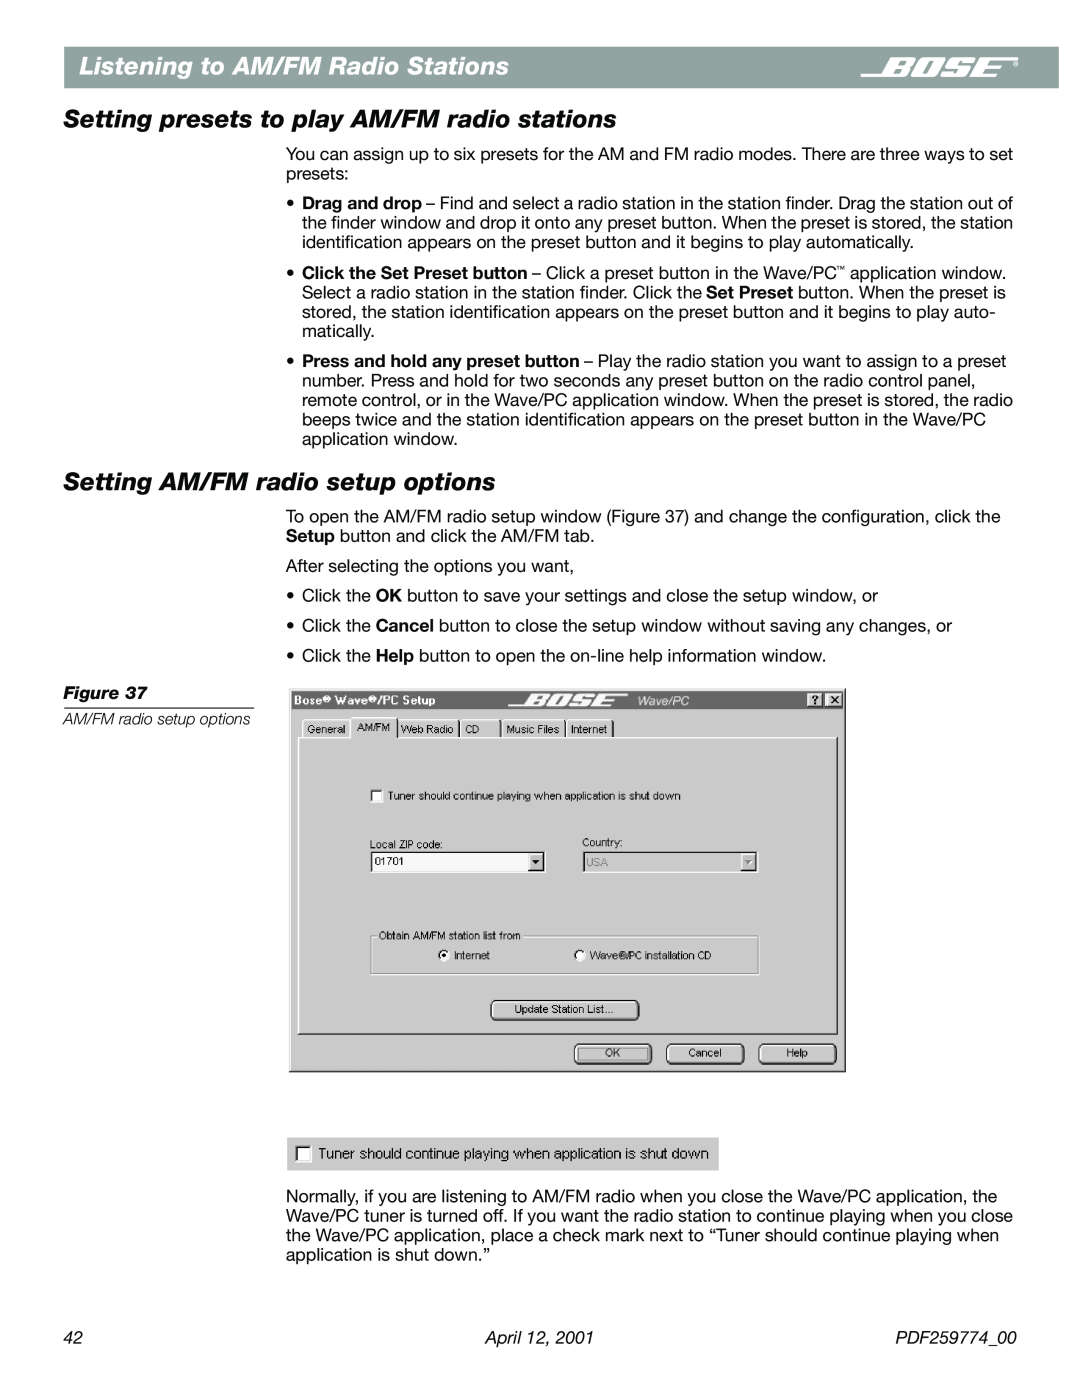 Bose PDF259774_00 manual Setting presets to play AM/FM radio stations, Setting AM/FM radio setup options 